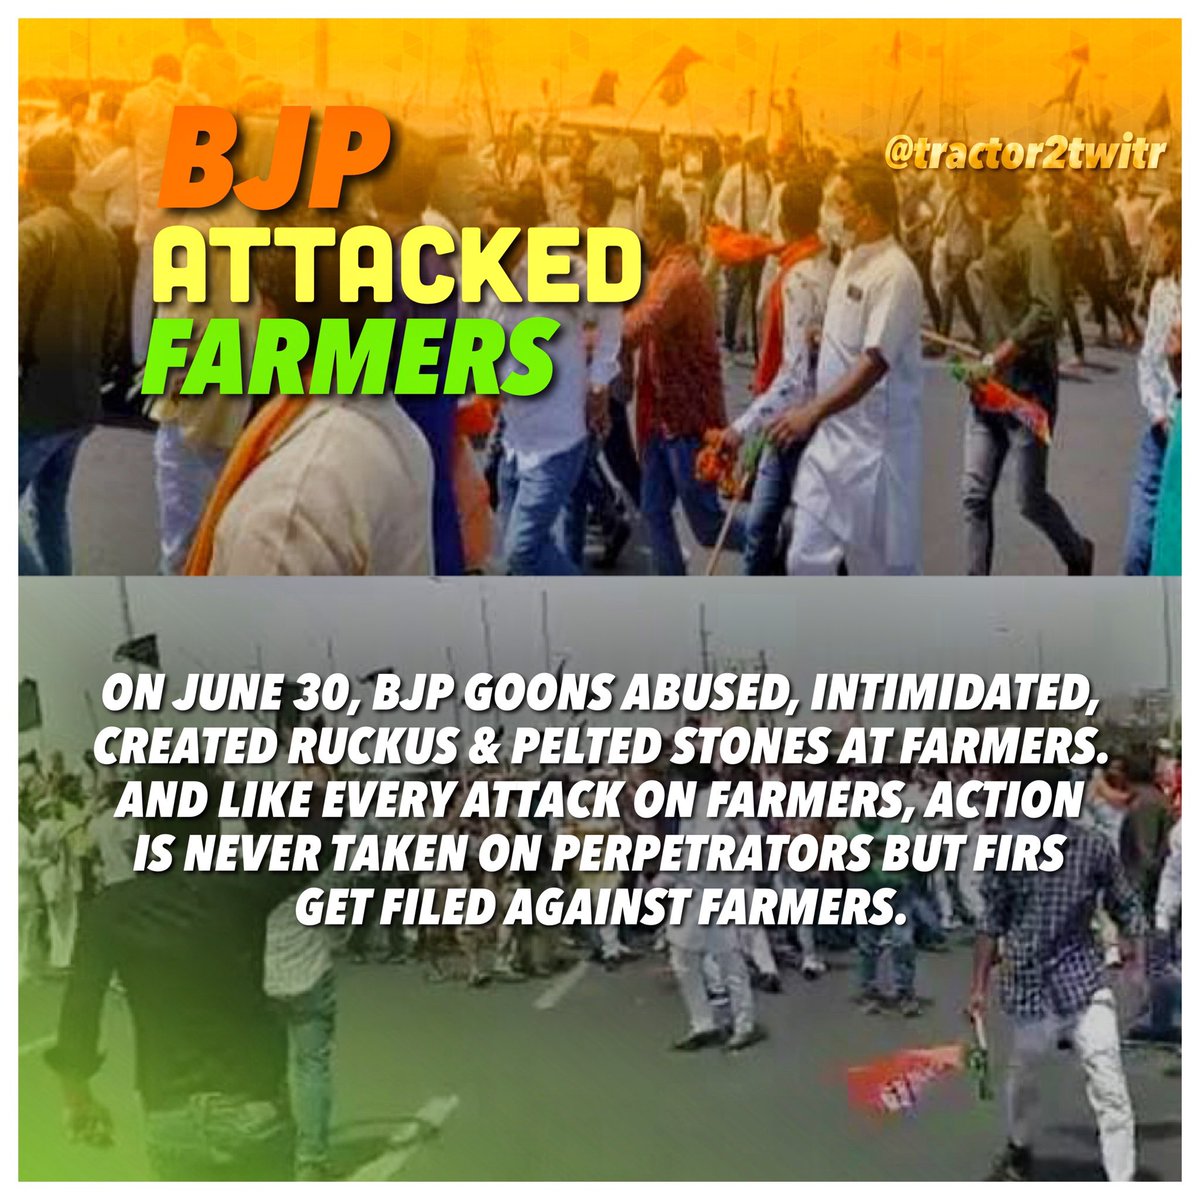 RT @davinder_7: Stop targeting farmers 

#FarmersProtest 

#BJPAttackedFarmers https://t.co/9J1wm6Mk3p